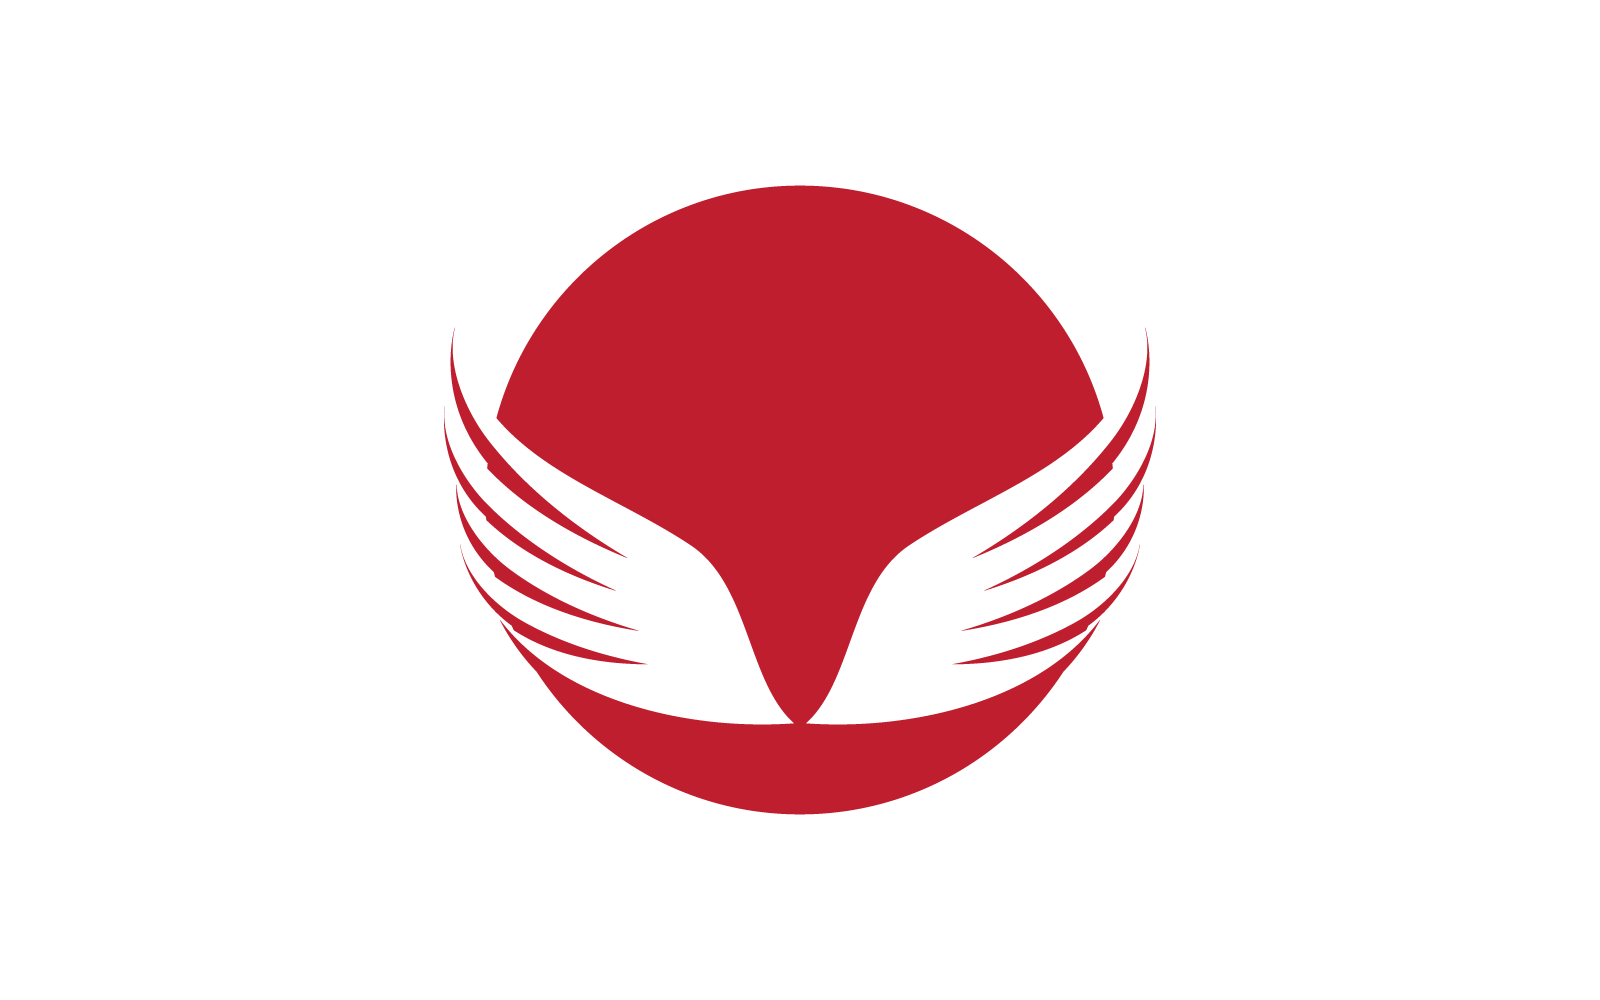 Wing illustration logo design vector template